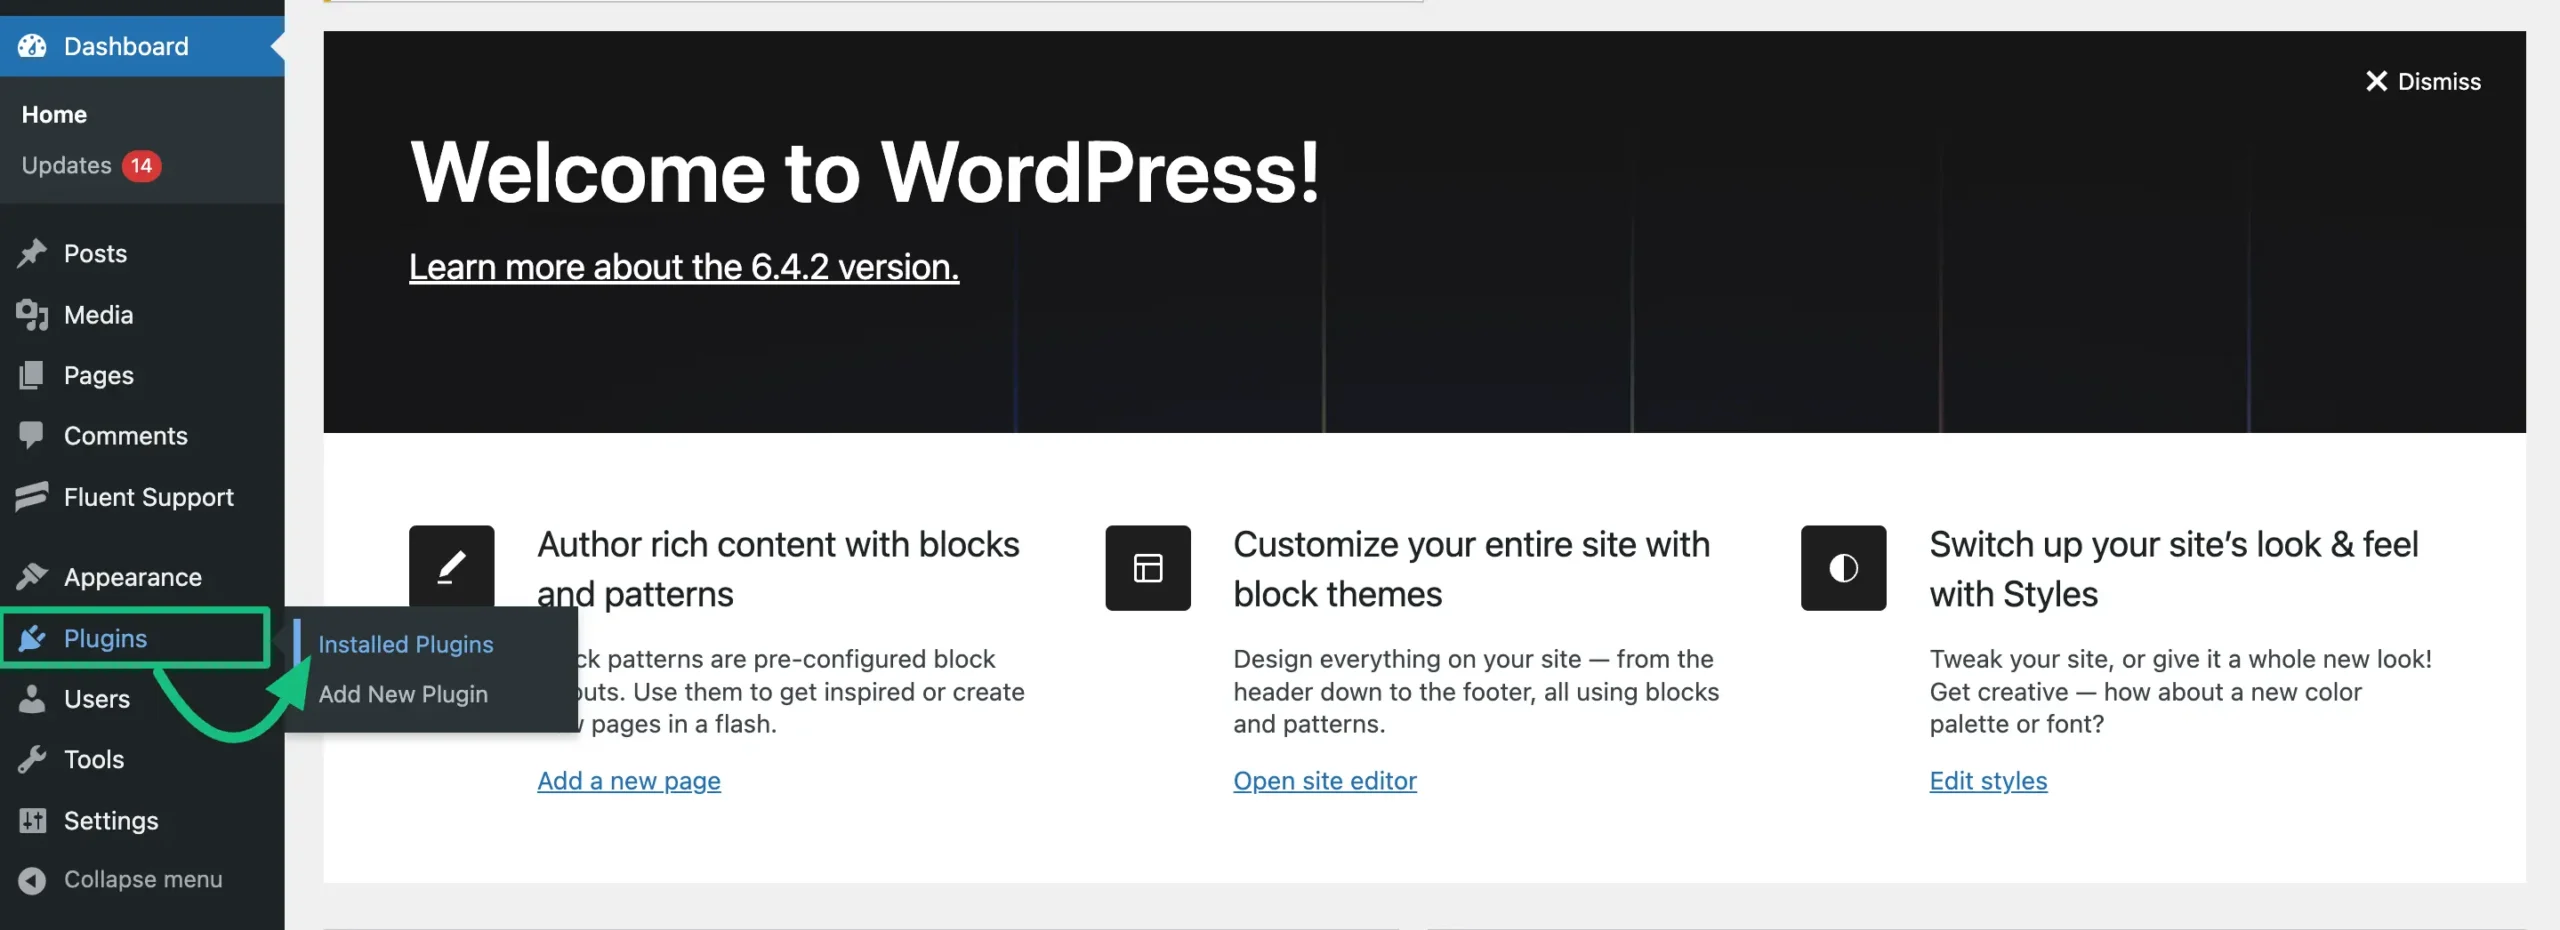 Plugins from WordPress Dashboard